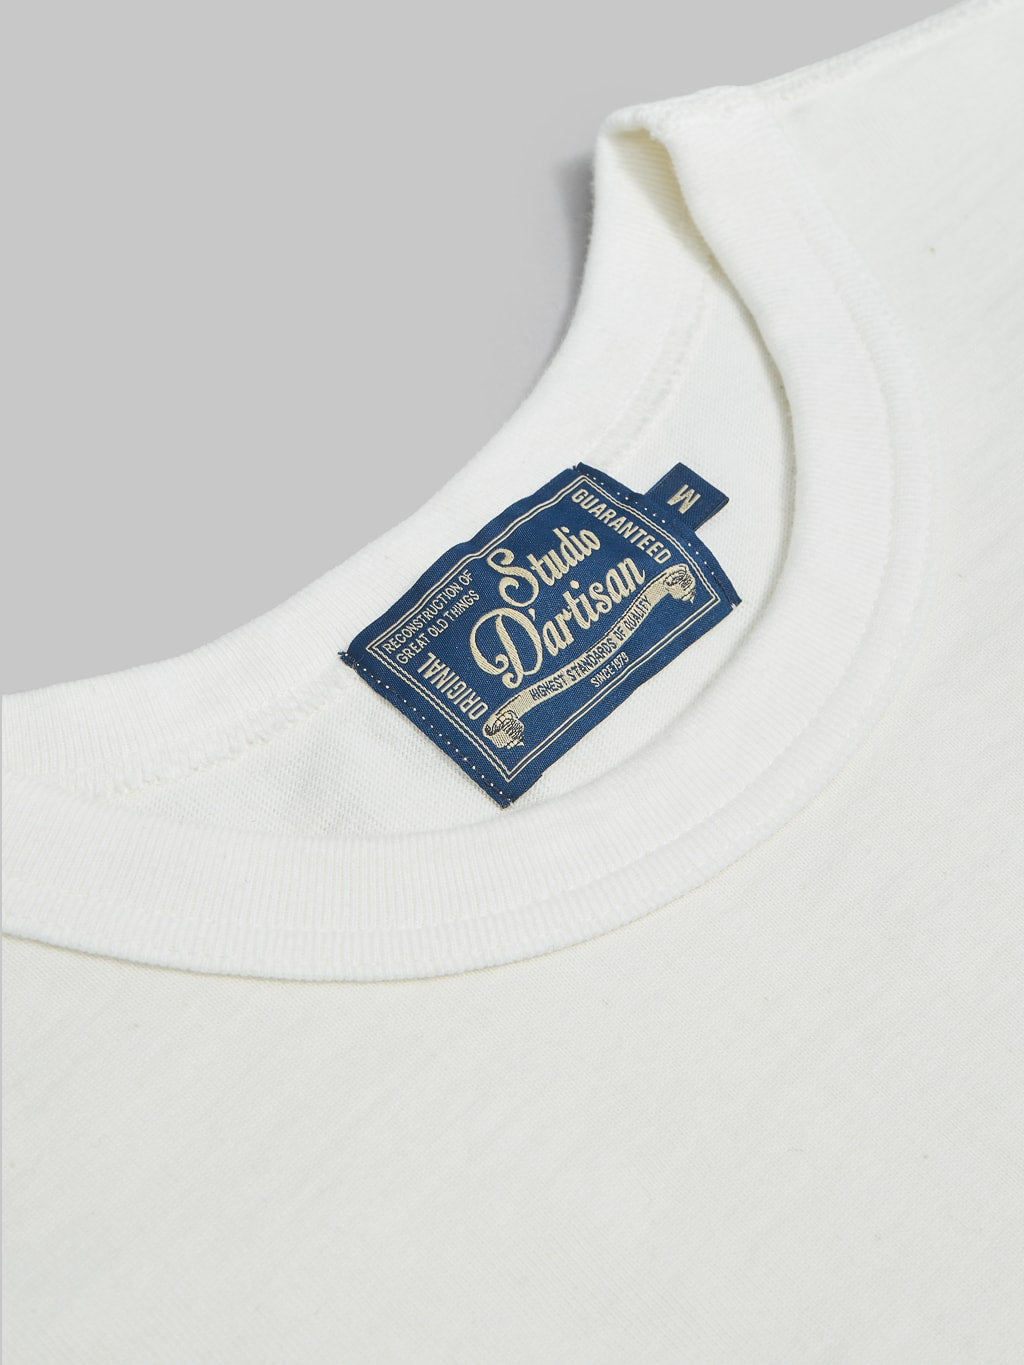 Studio DArtisan Suvin Gold Loopwheeled Tshirt white label